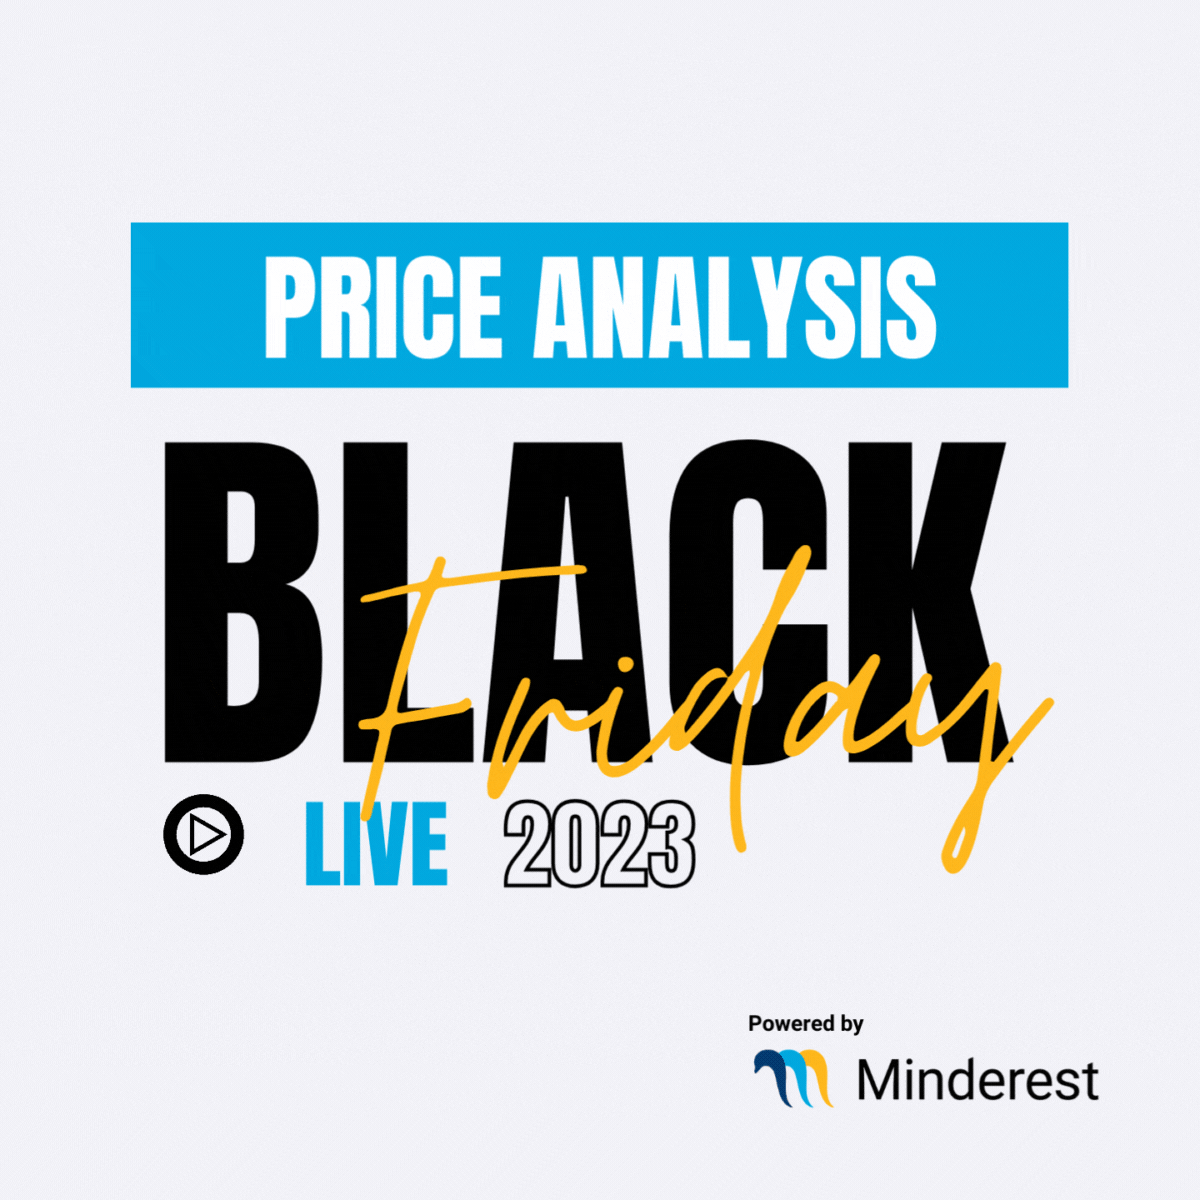 Live Price Analysis of 2023 Black Friday USA